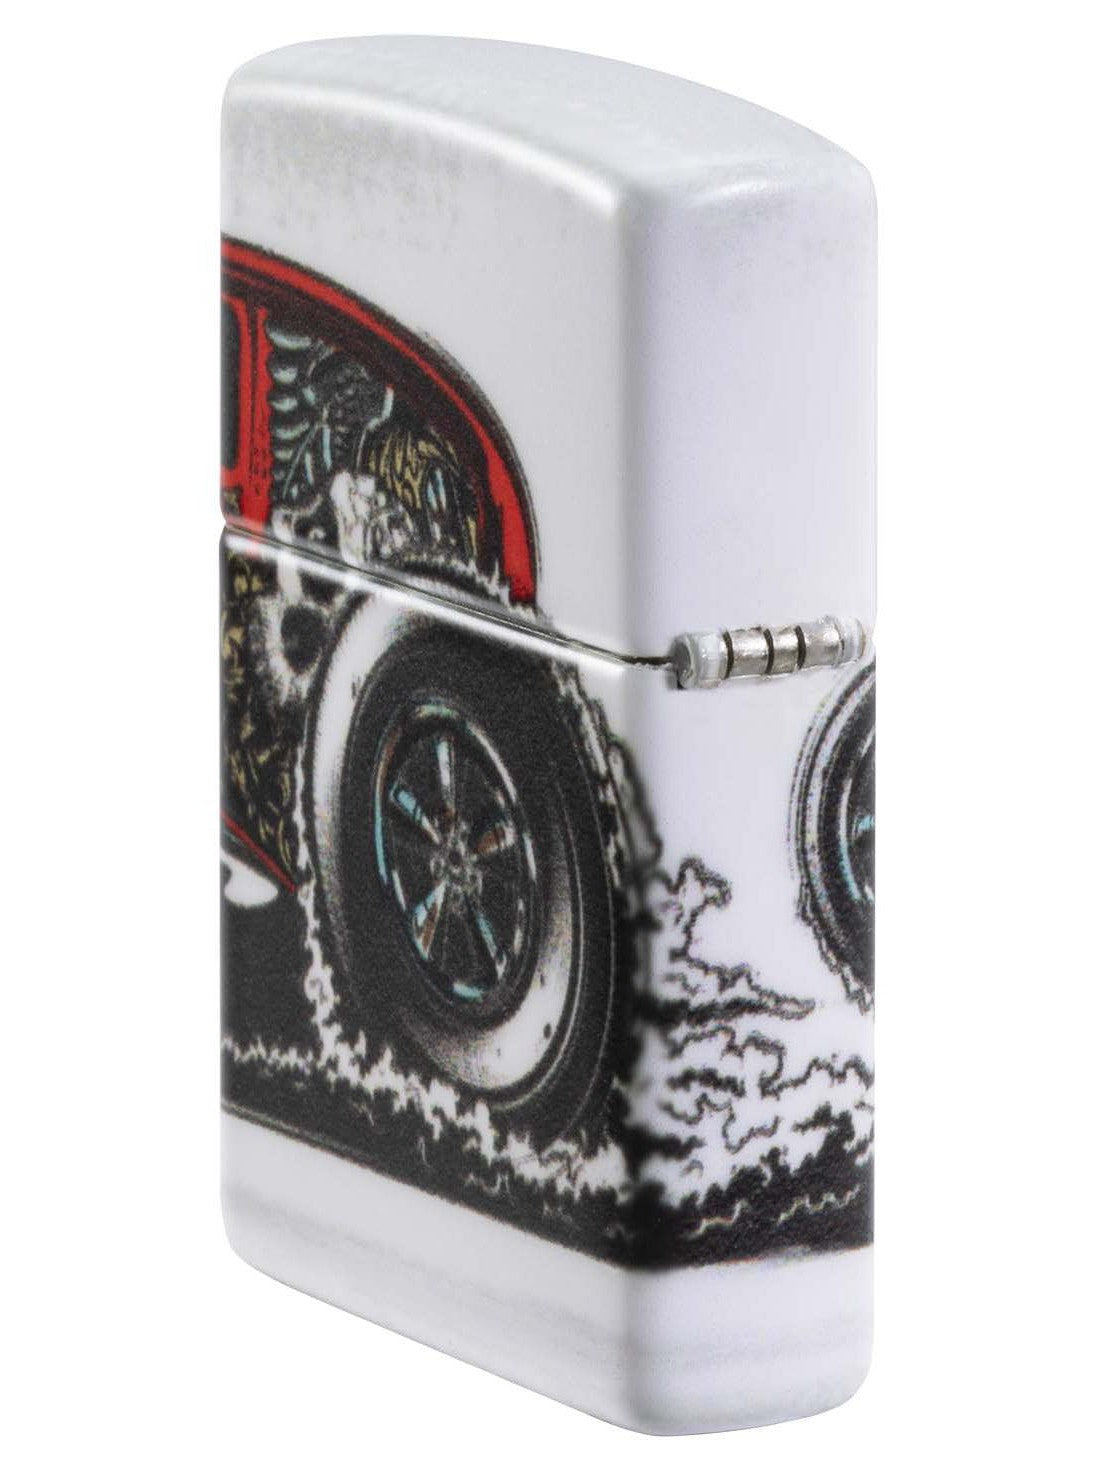 Zippo Lighter: Hot Rod Car - 540 Color 48660